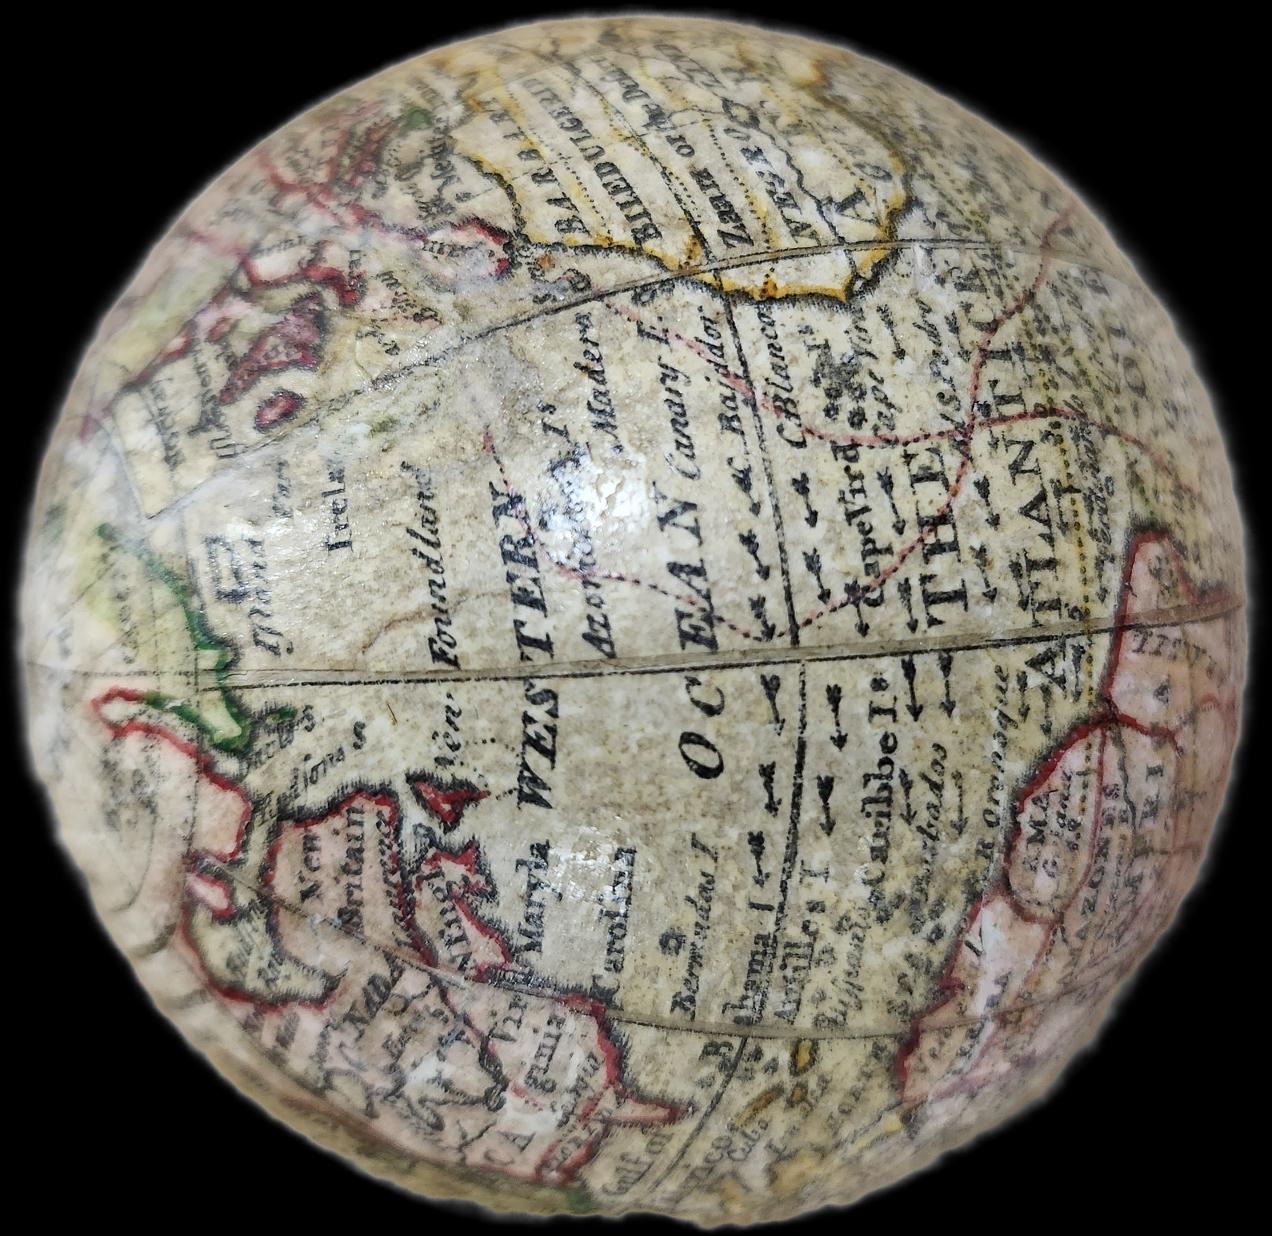 Britannique Un magnifique globe de poche terrestre miniature en vente